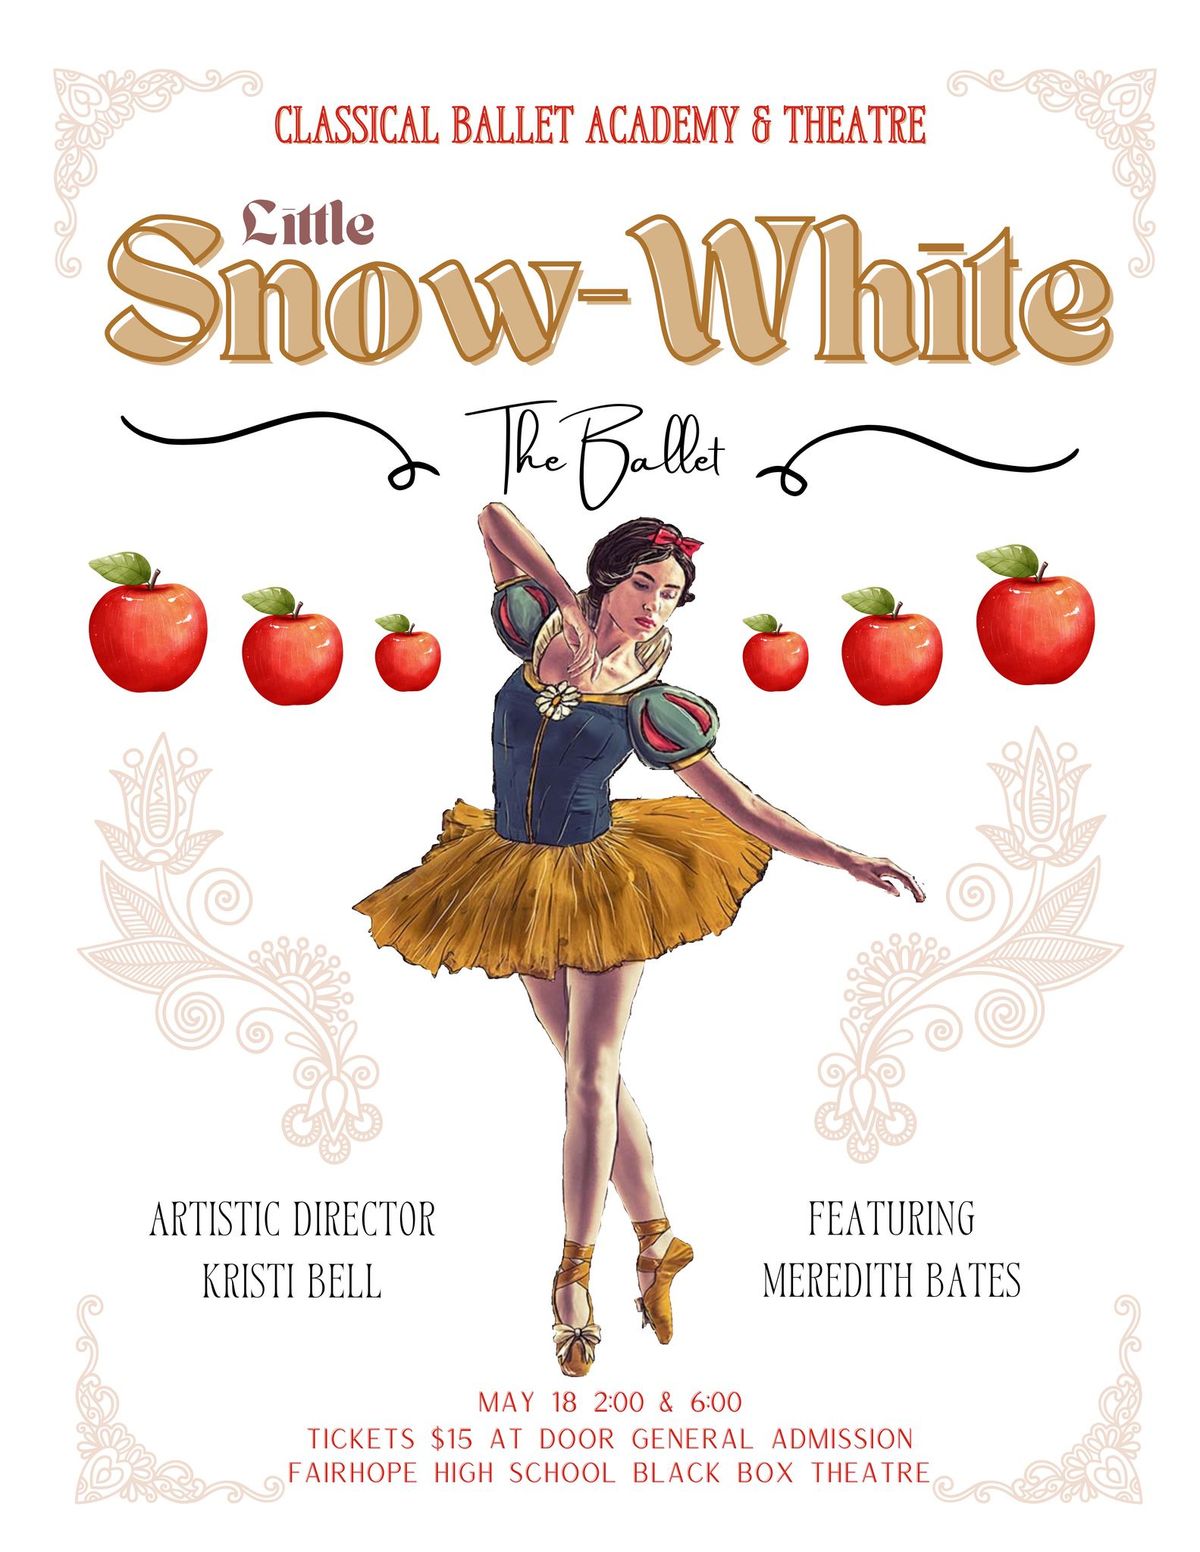 "Little Snow-White" the Ballet